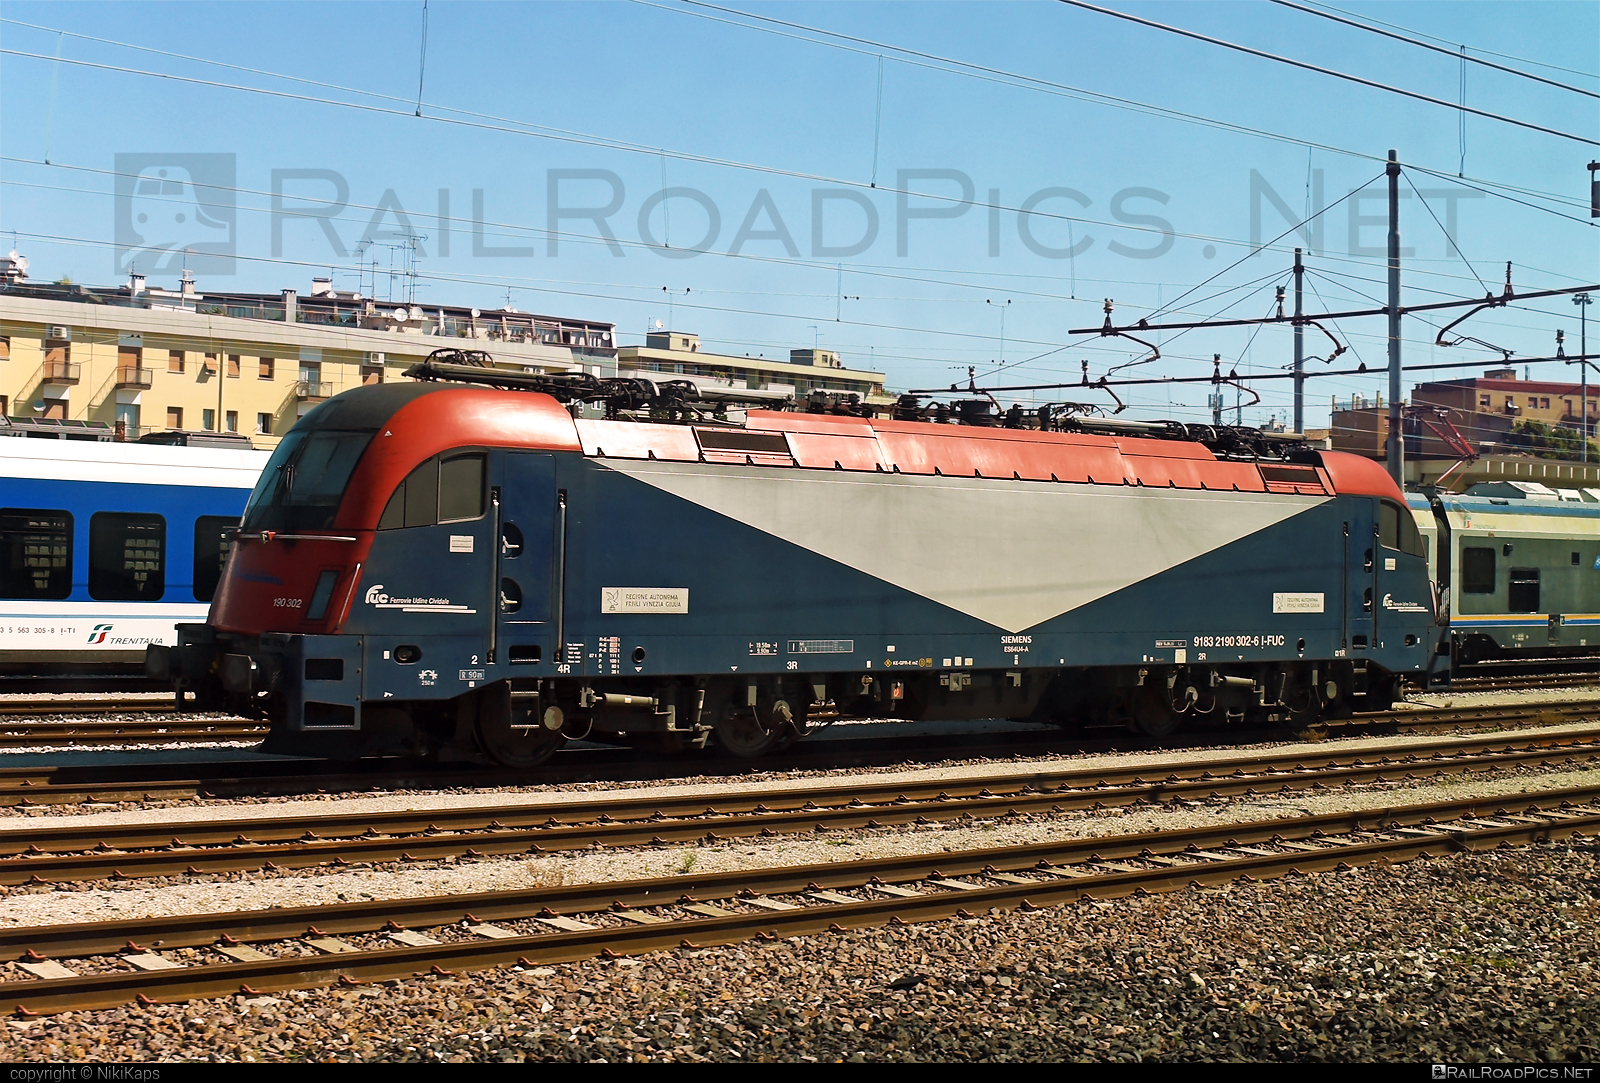 Siemens ES 64 U4 - 190 302 operated by Società Ferrovie Udine Cividale #es64 #es64u4 #eurosprinter #fuc #siemens #siemensEs64 #siemensEs64u4 #siemenstaurus #taurus #tauruslocomotive